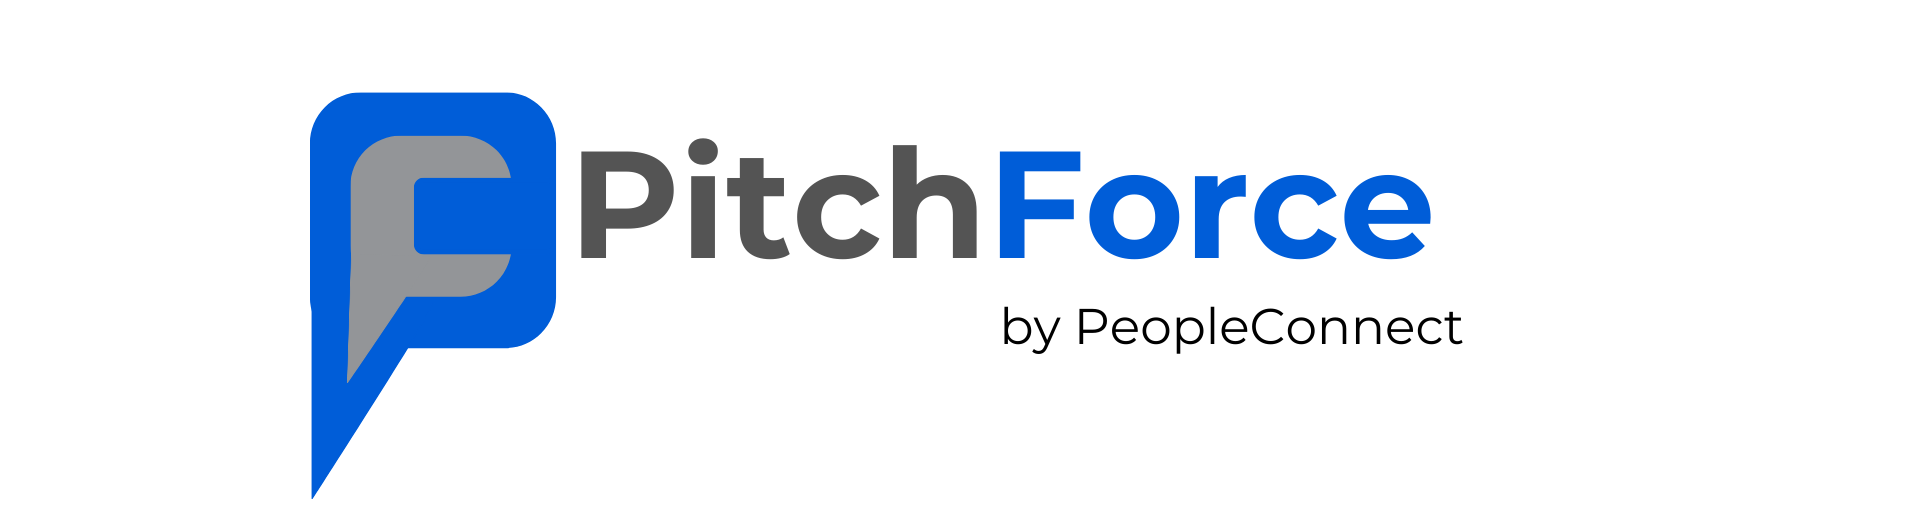 PitchForce logo